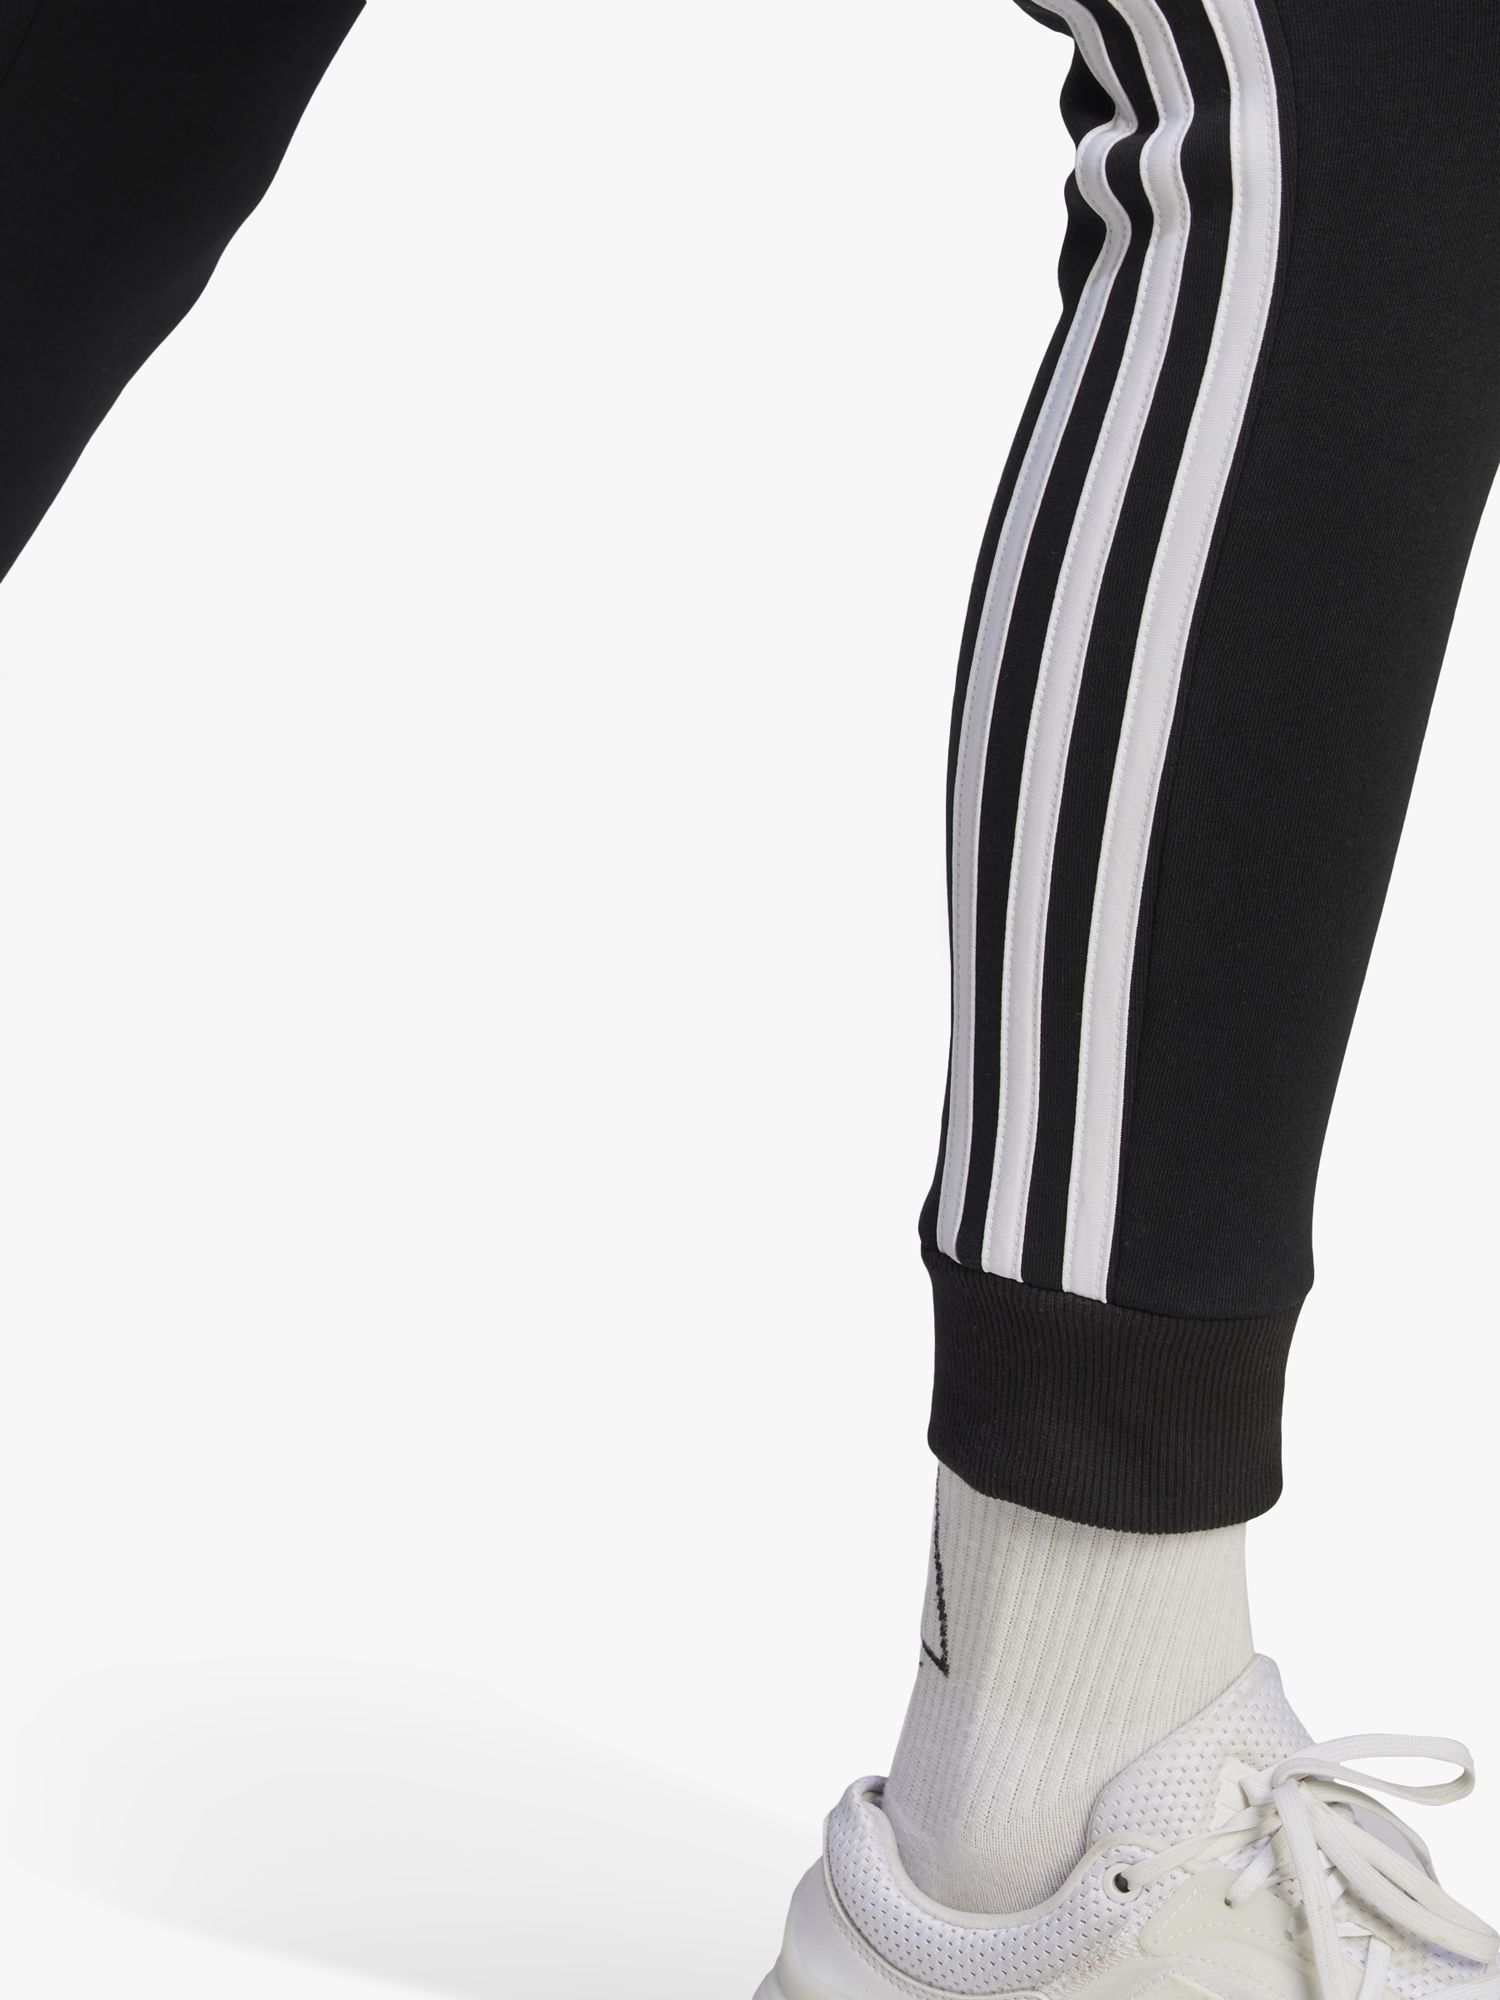 adidas 3-Stripes Fleece Joggers, Black/White at John Lewis & Partners